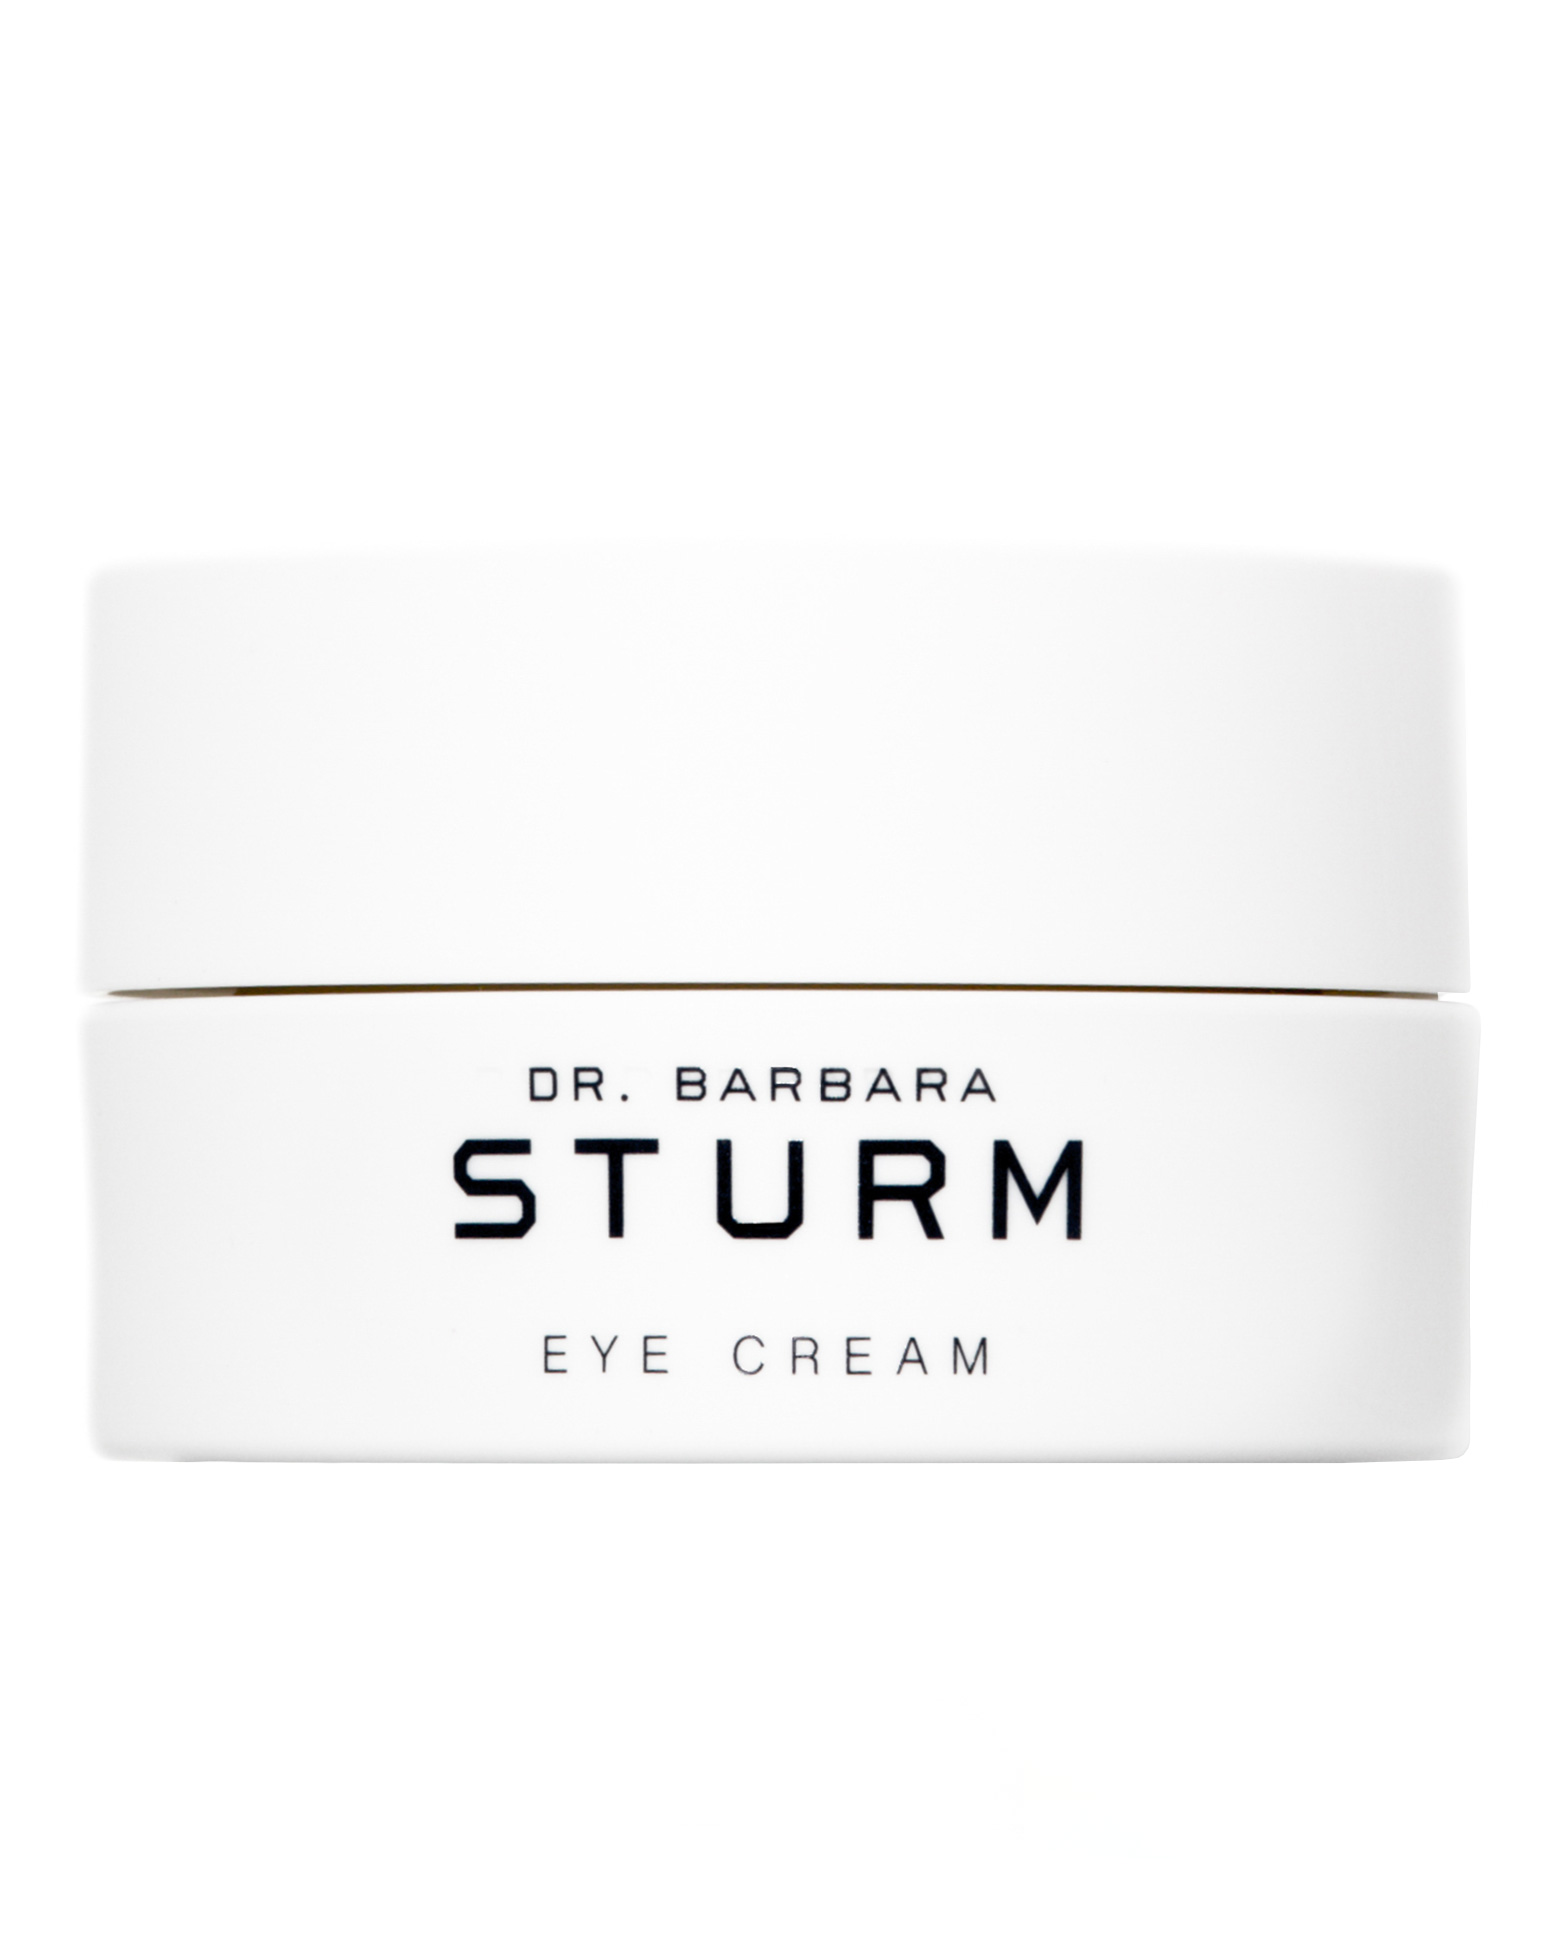 Best eye cream for dark circles: Dr. Barbara Sturm Eye Cream